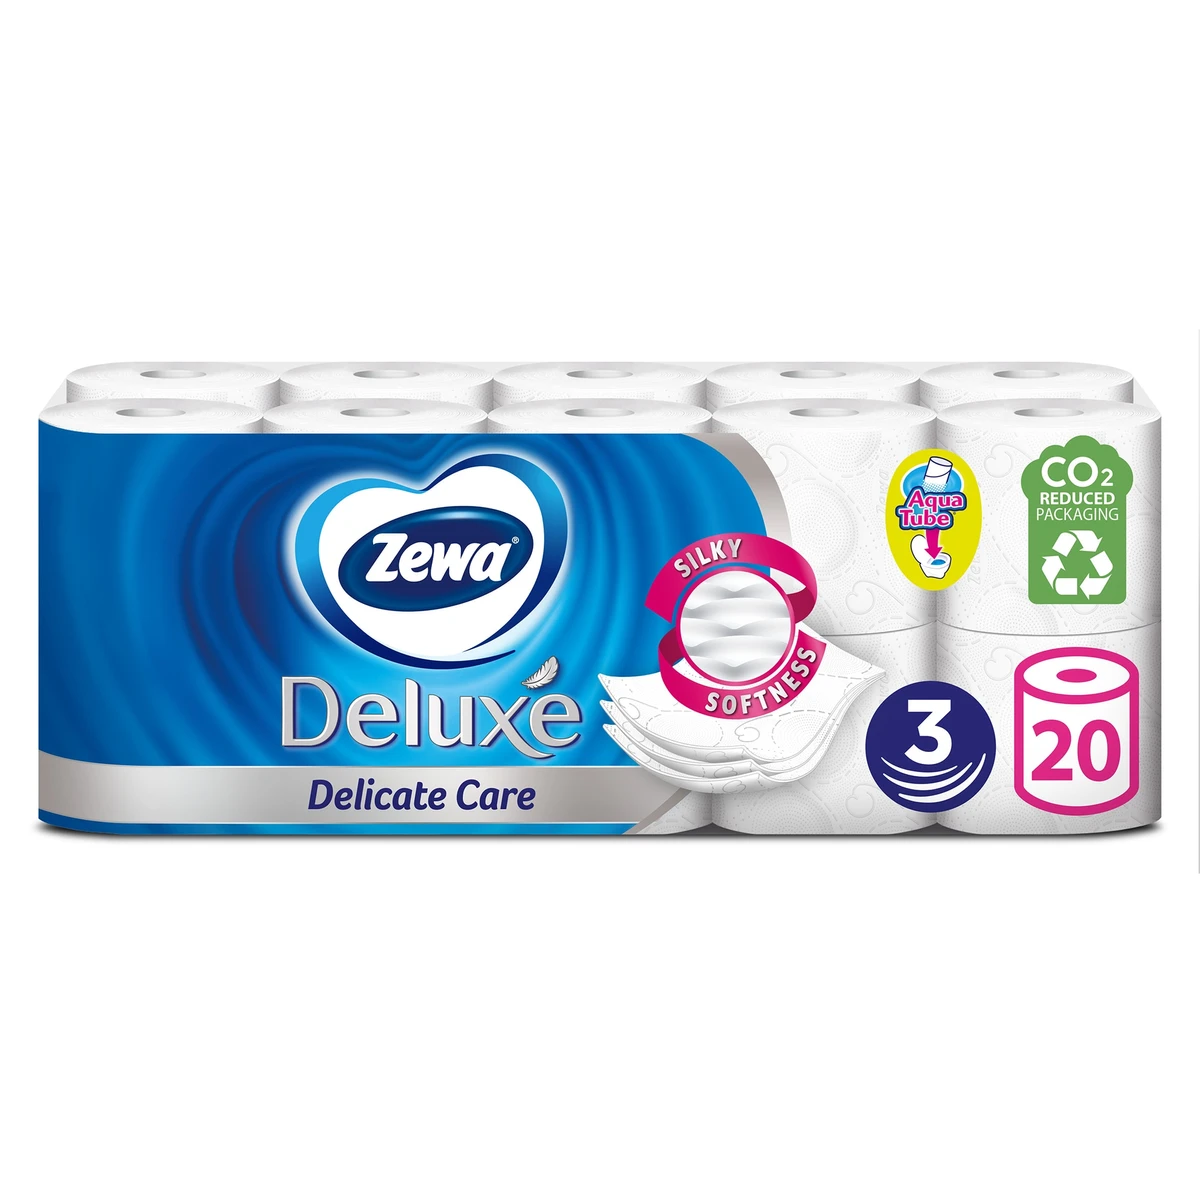 Zewa Deluxe Delicate Care 3 rétegű toalettpapír 20 tekercs